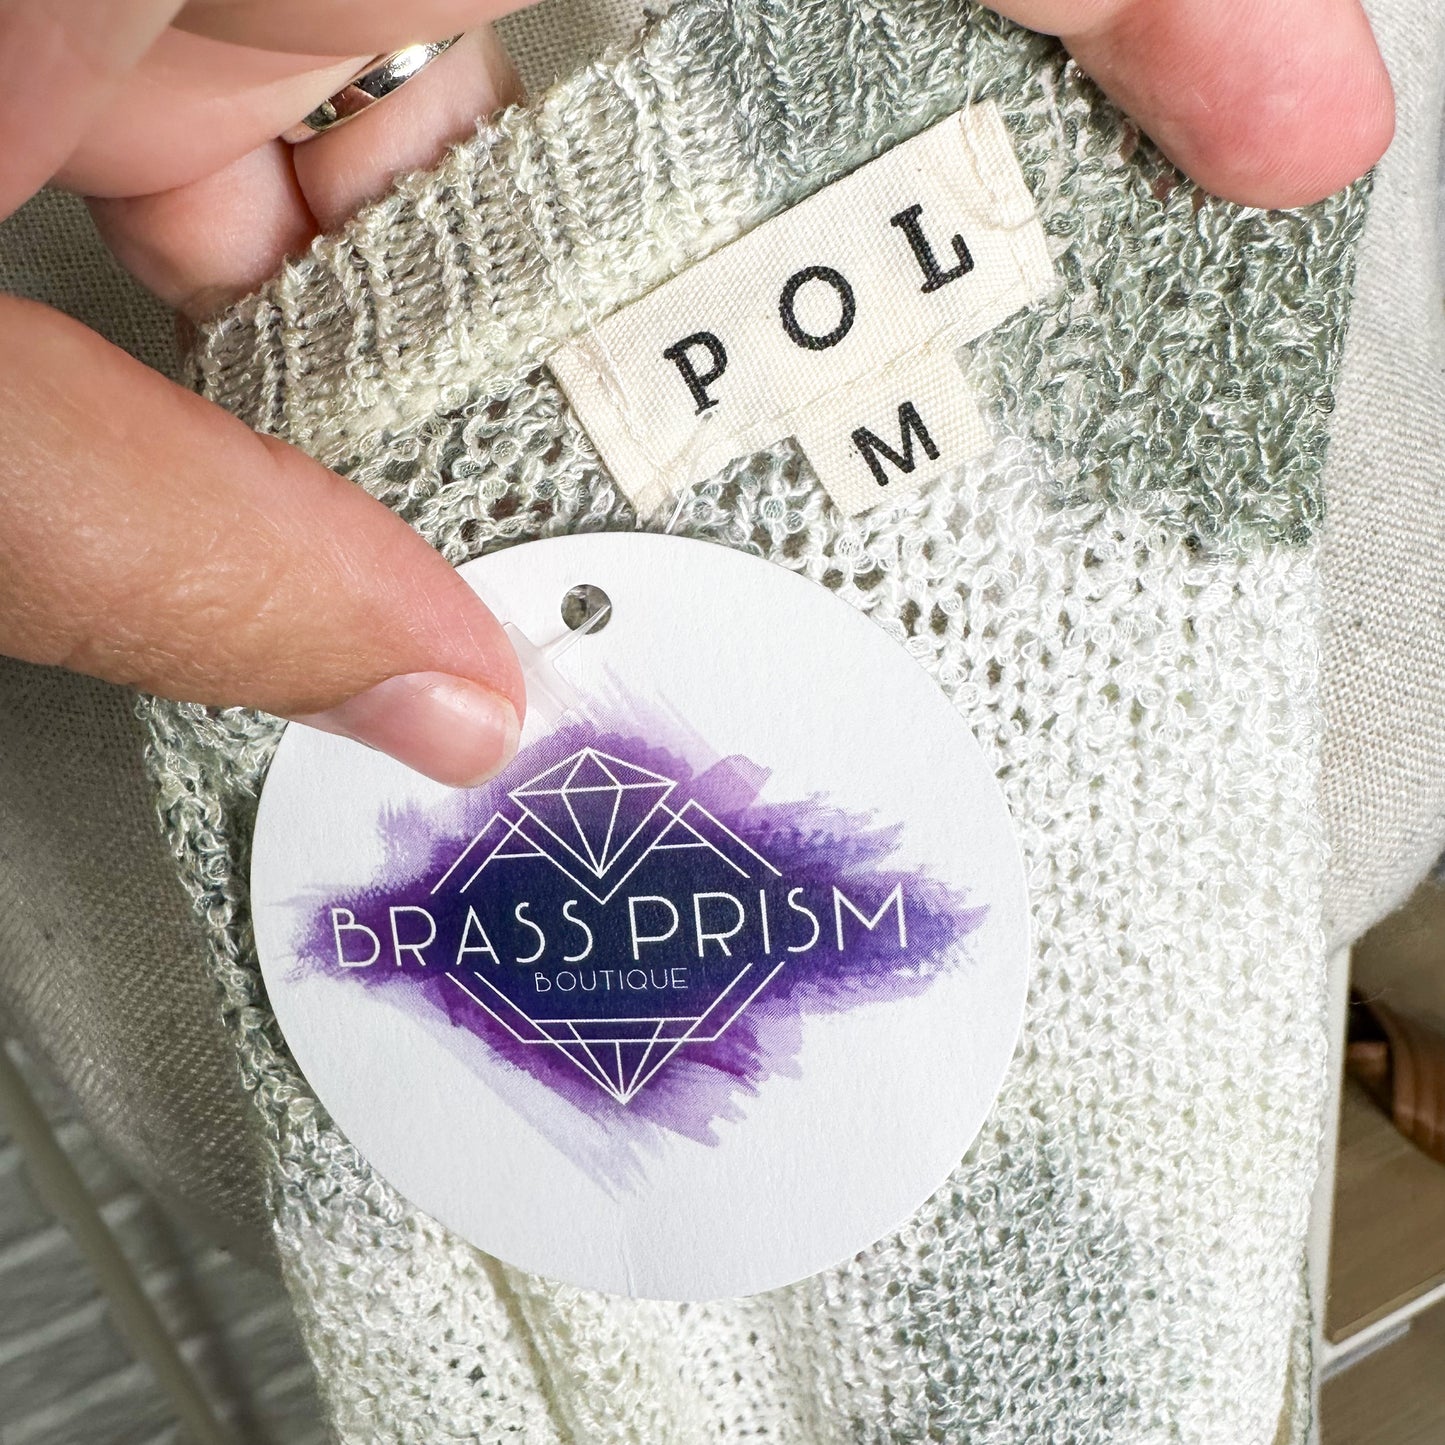 Brass Prism POL New Camo Knit Top Size Medium